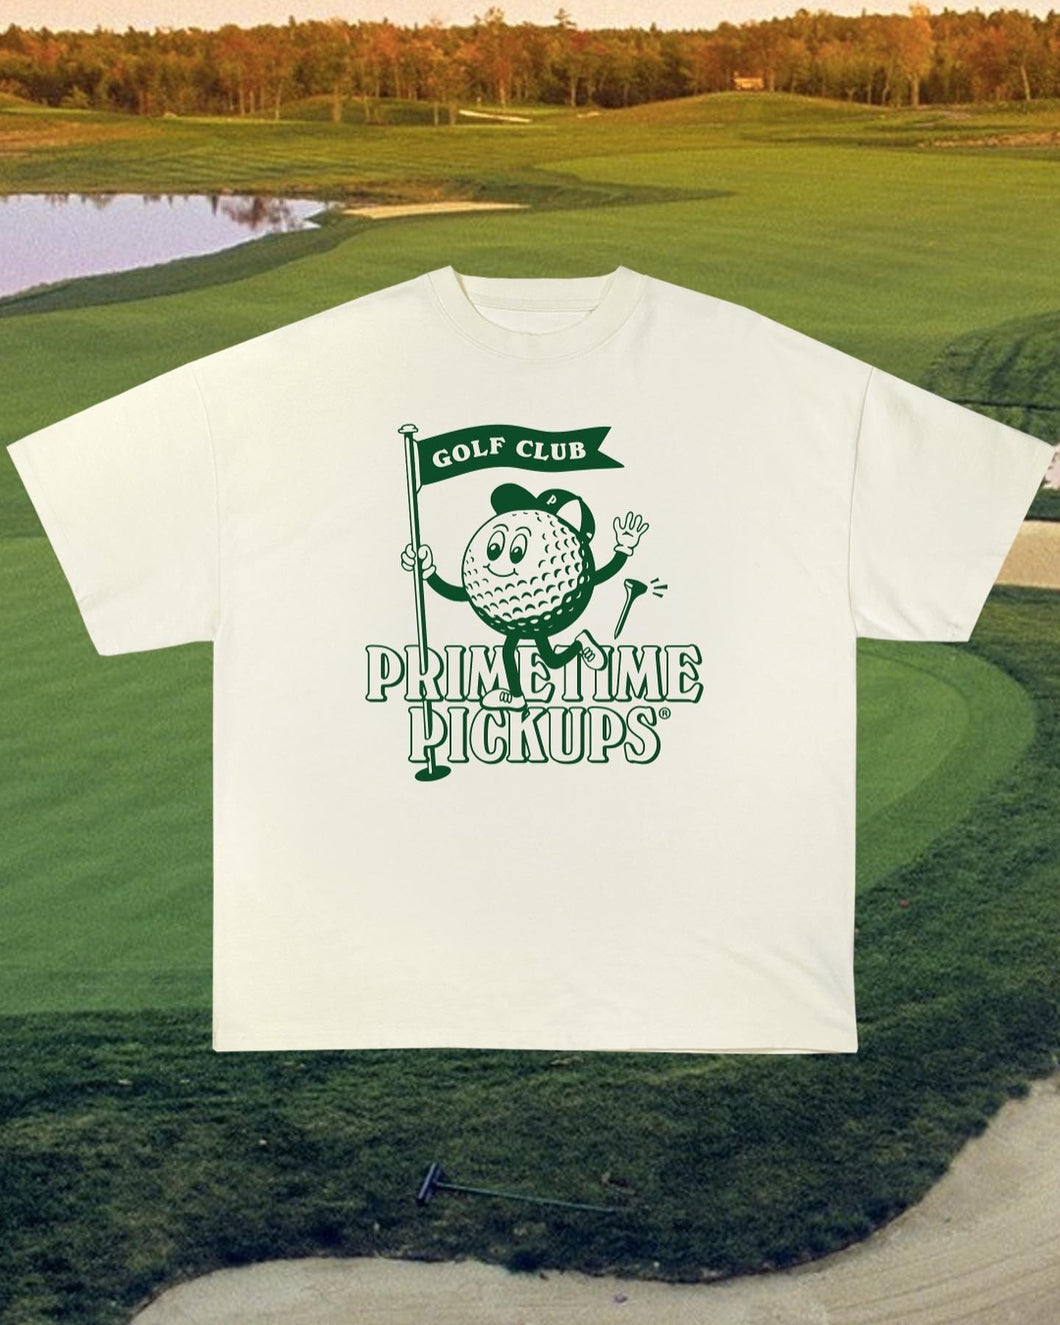 Golf Club T-Shirt - Creme